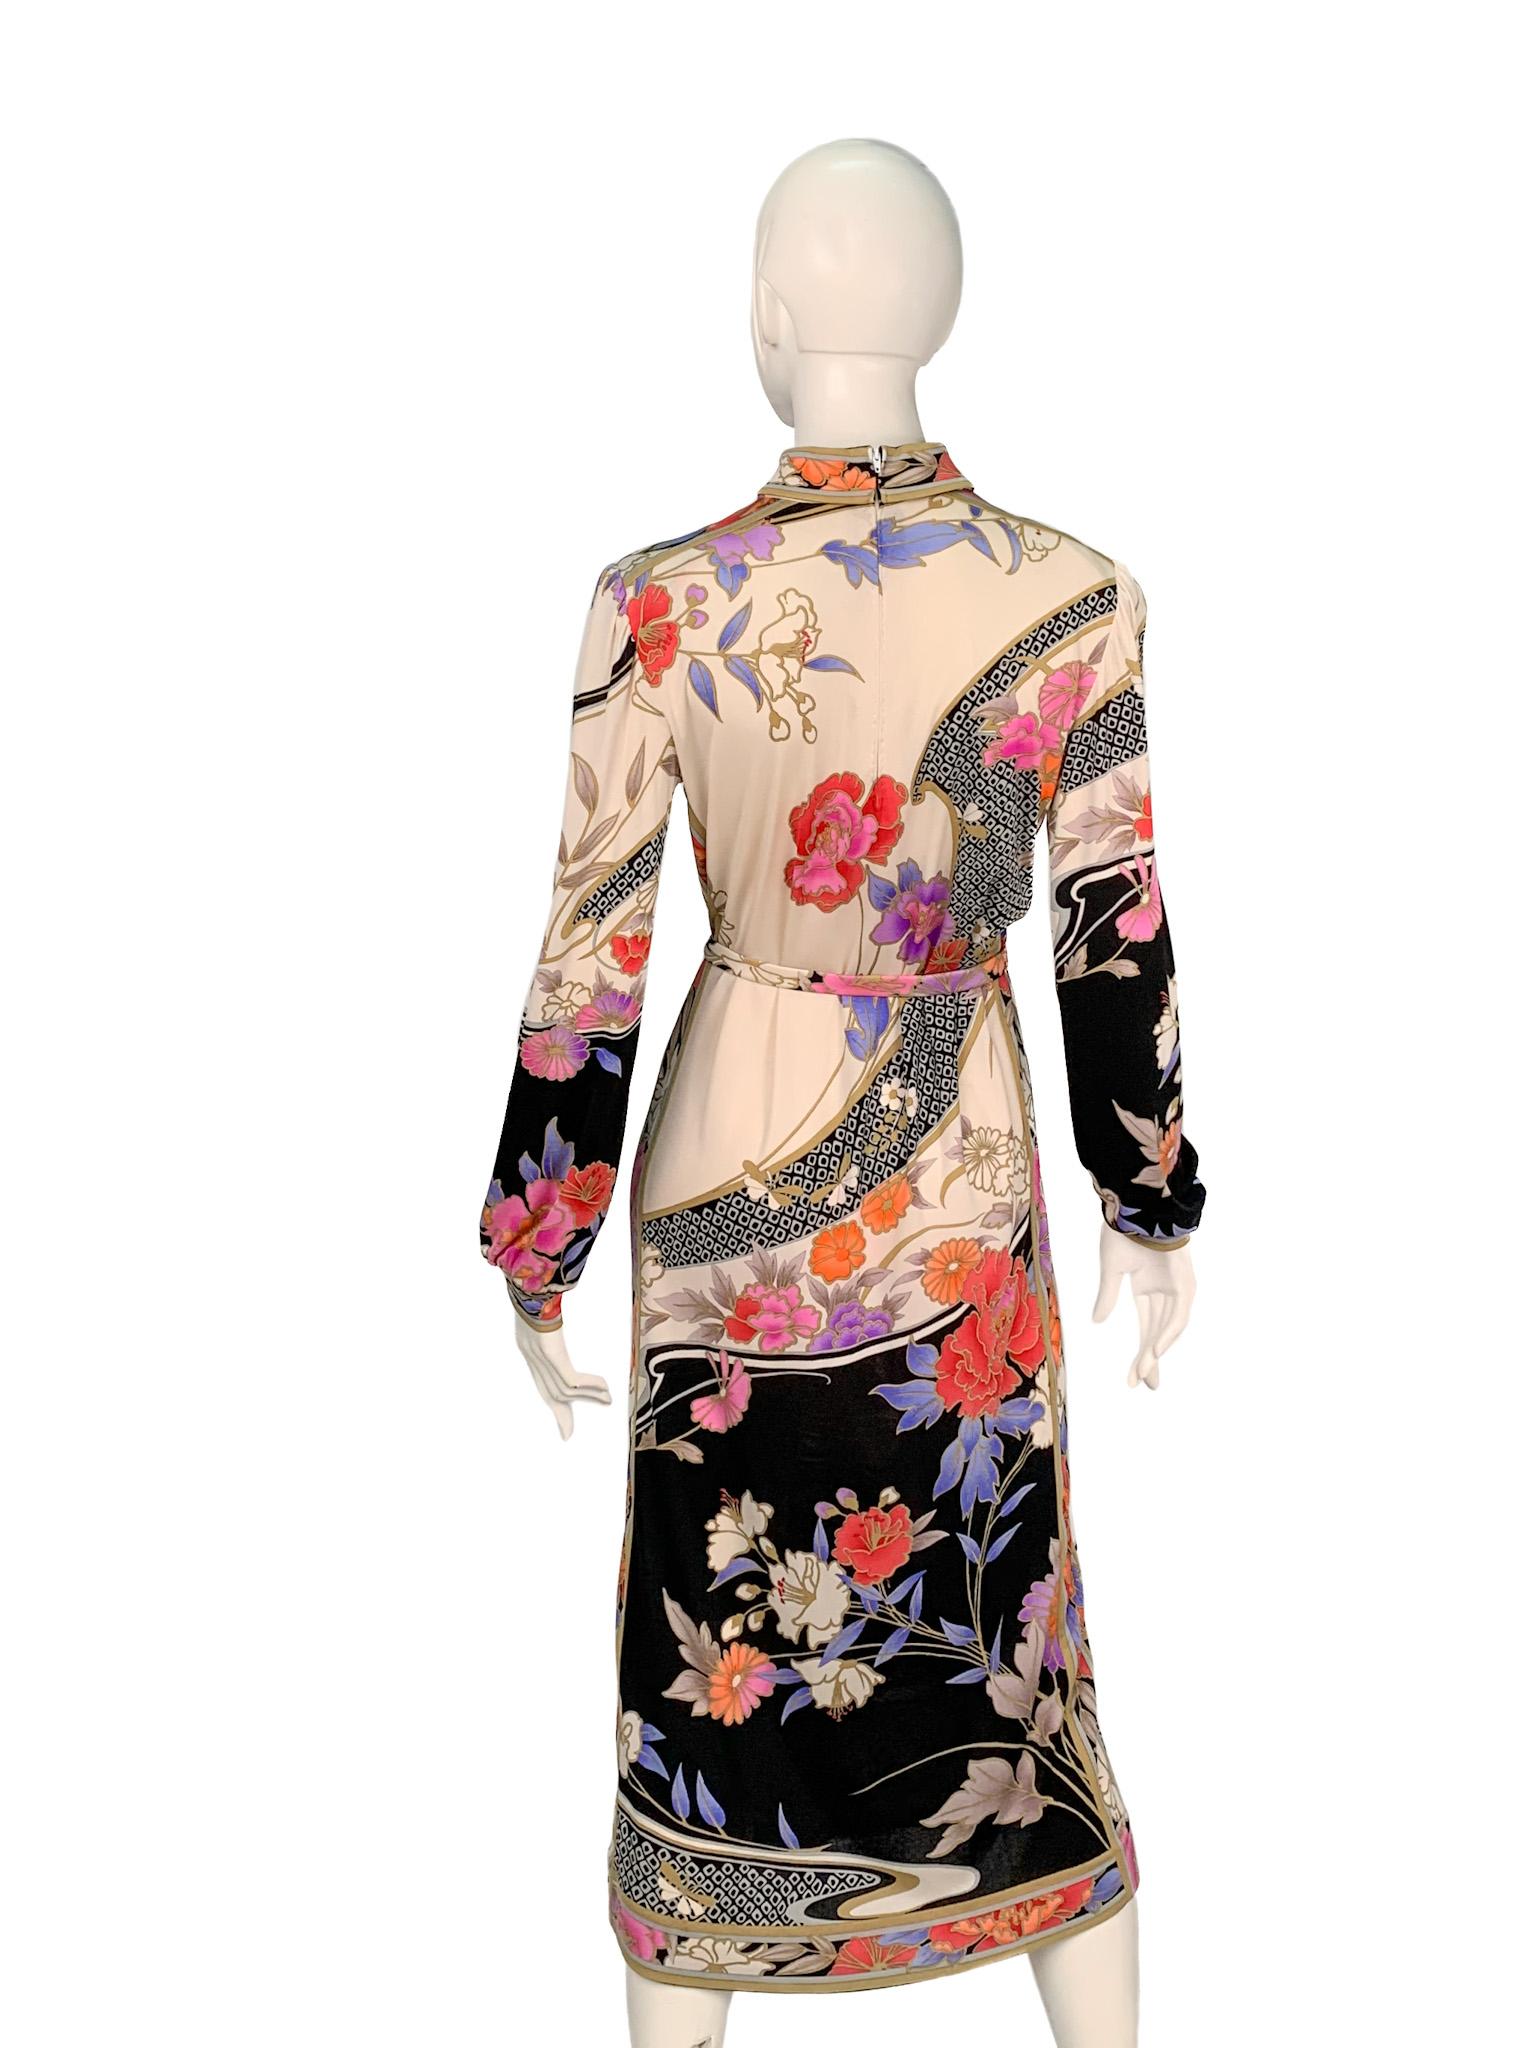 Leonard Paris printed dress in 100% mikado silk jersey. 2